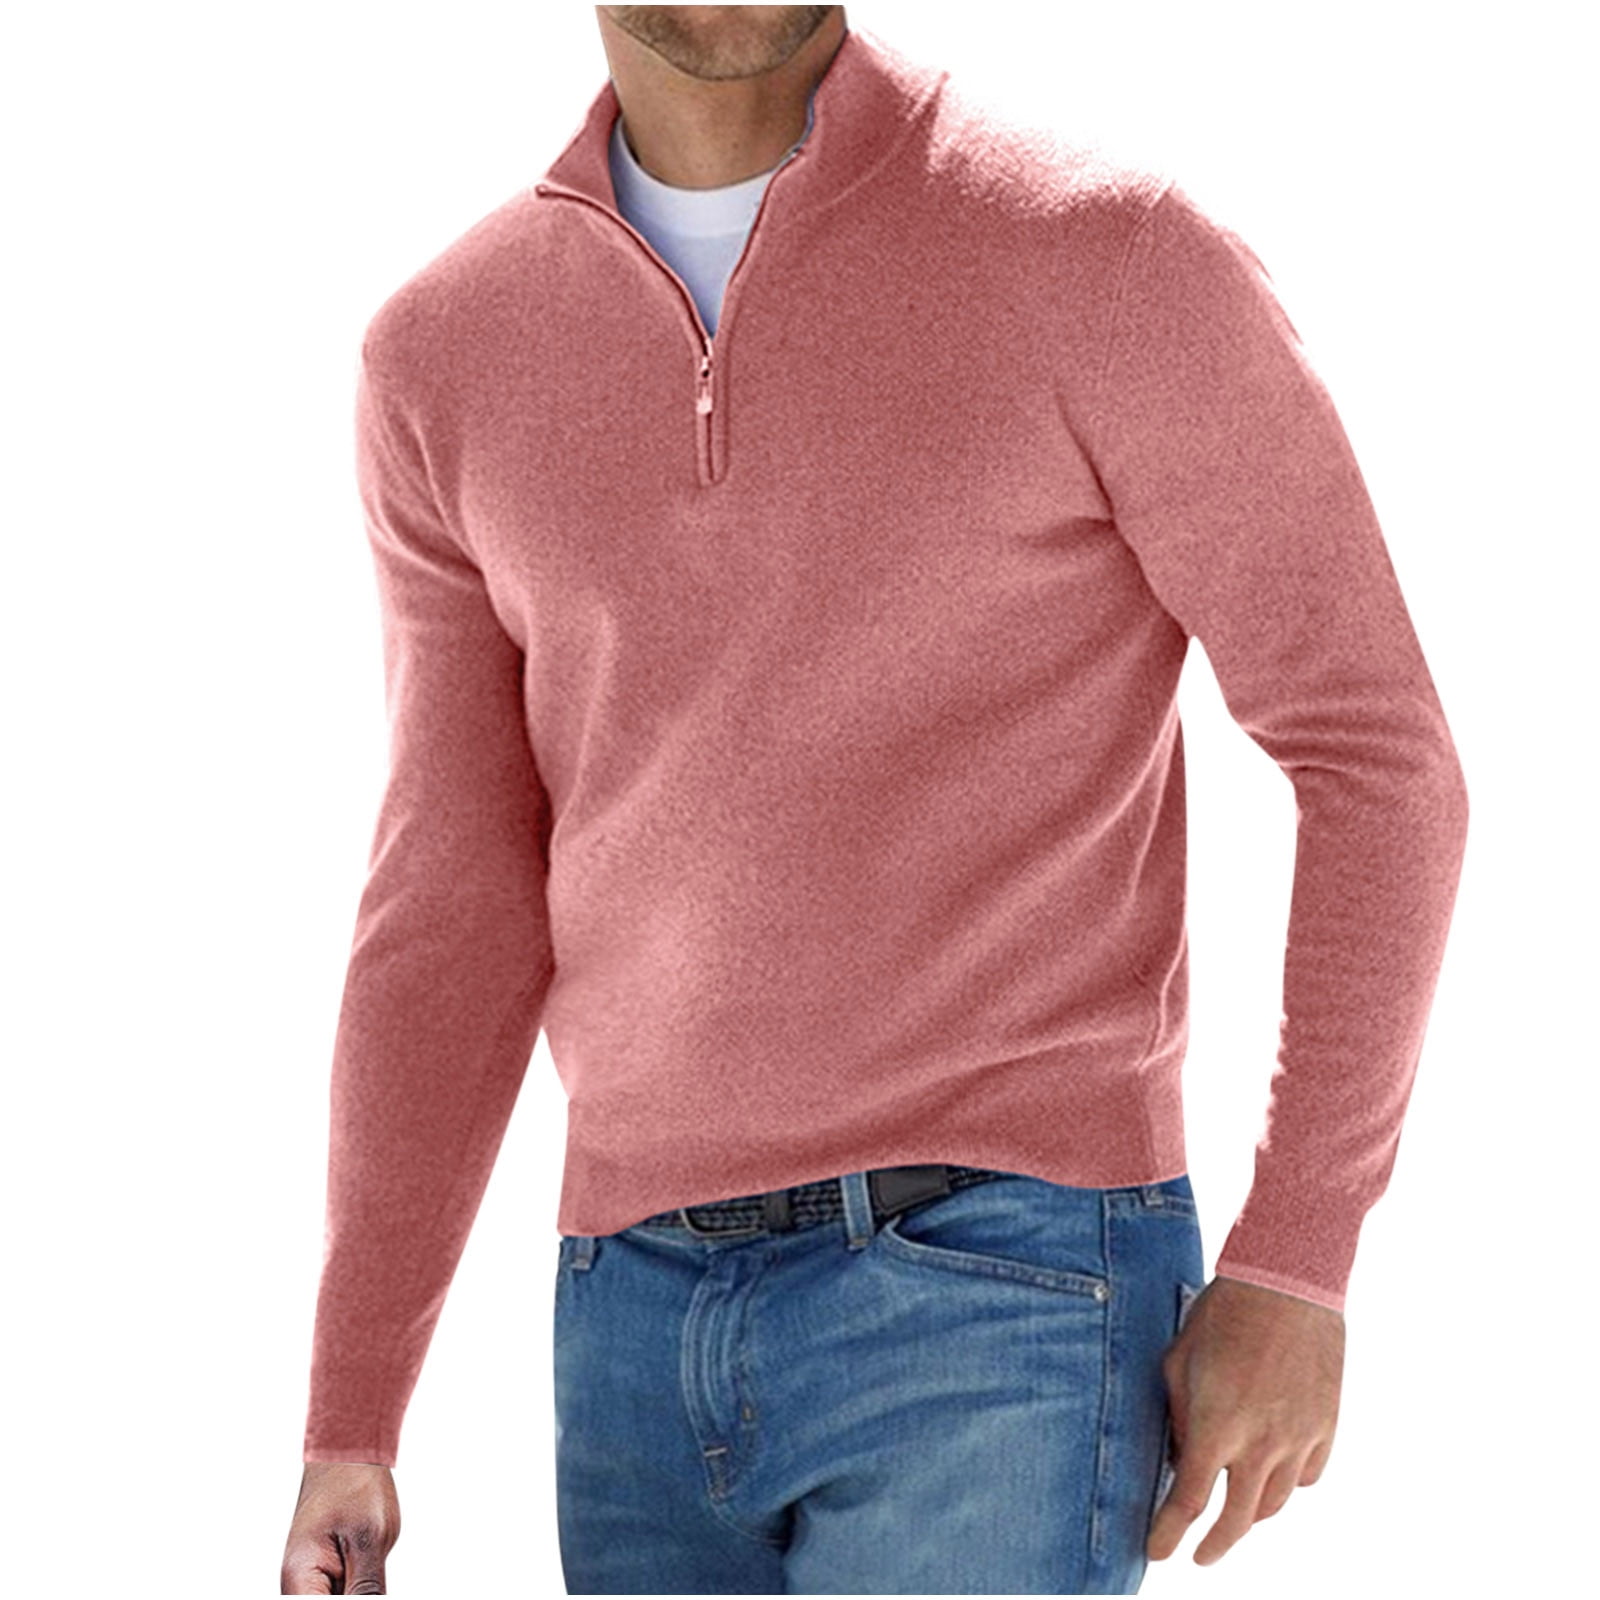 Men Sweatshirts Slim Fit Sweatshirts Winter Warm Outwear Long Sleeve V-Neck Jumpers Solid Tops Blouse A Light Blue,M 